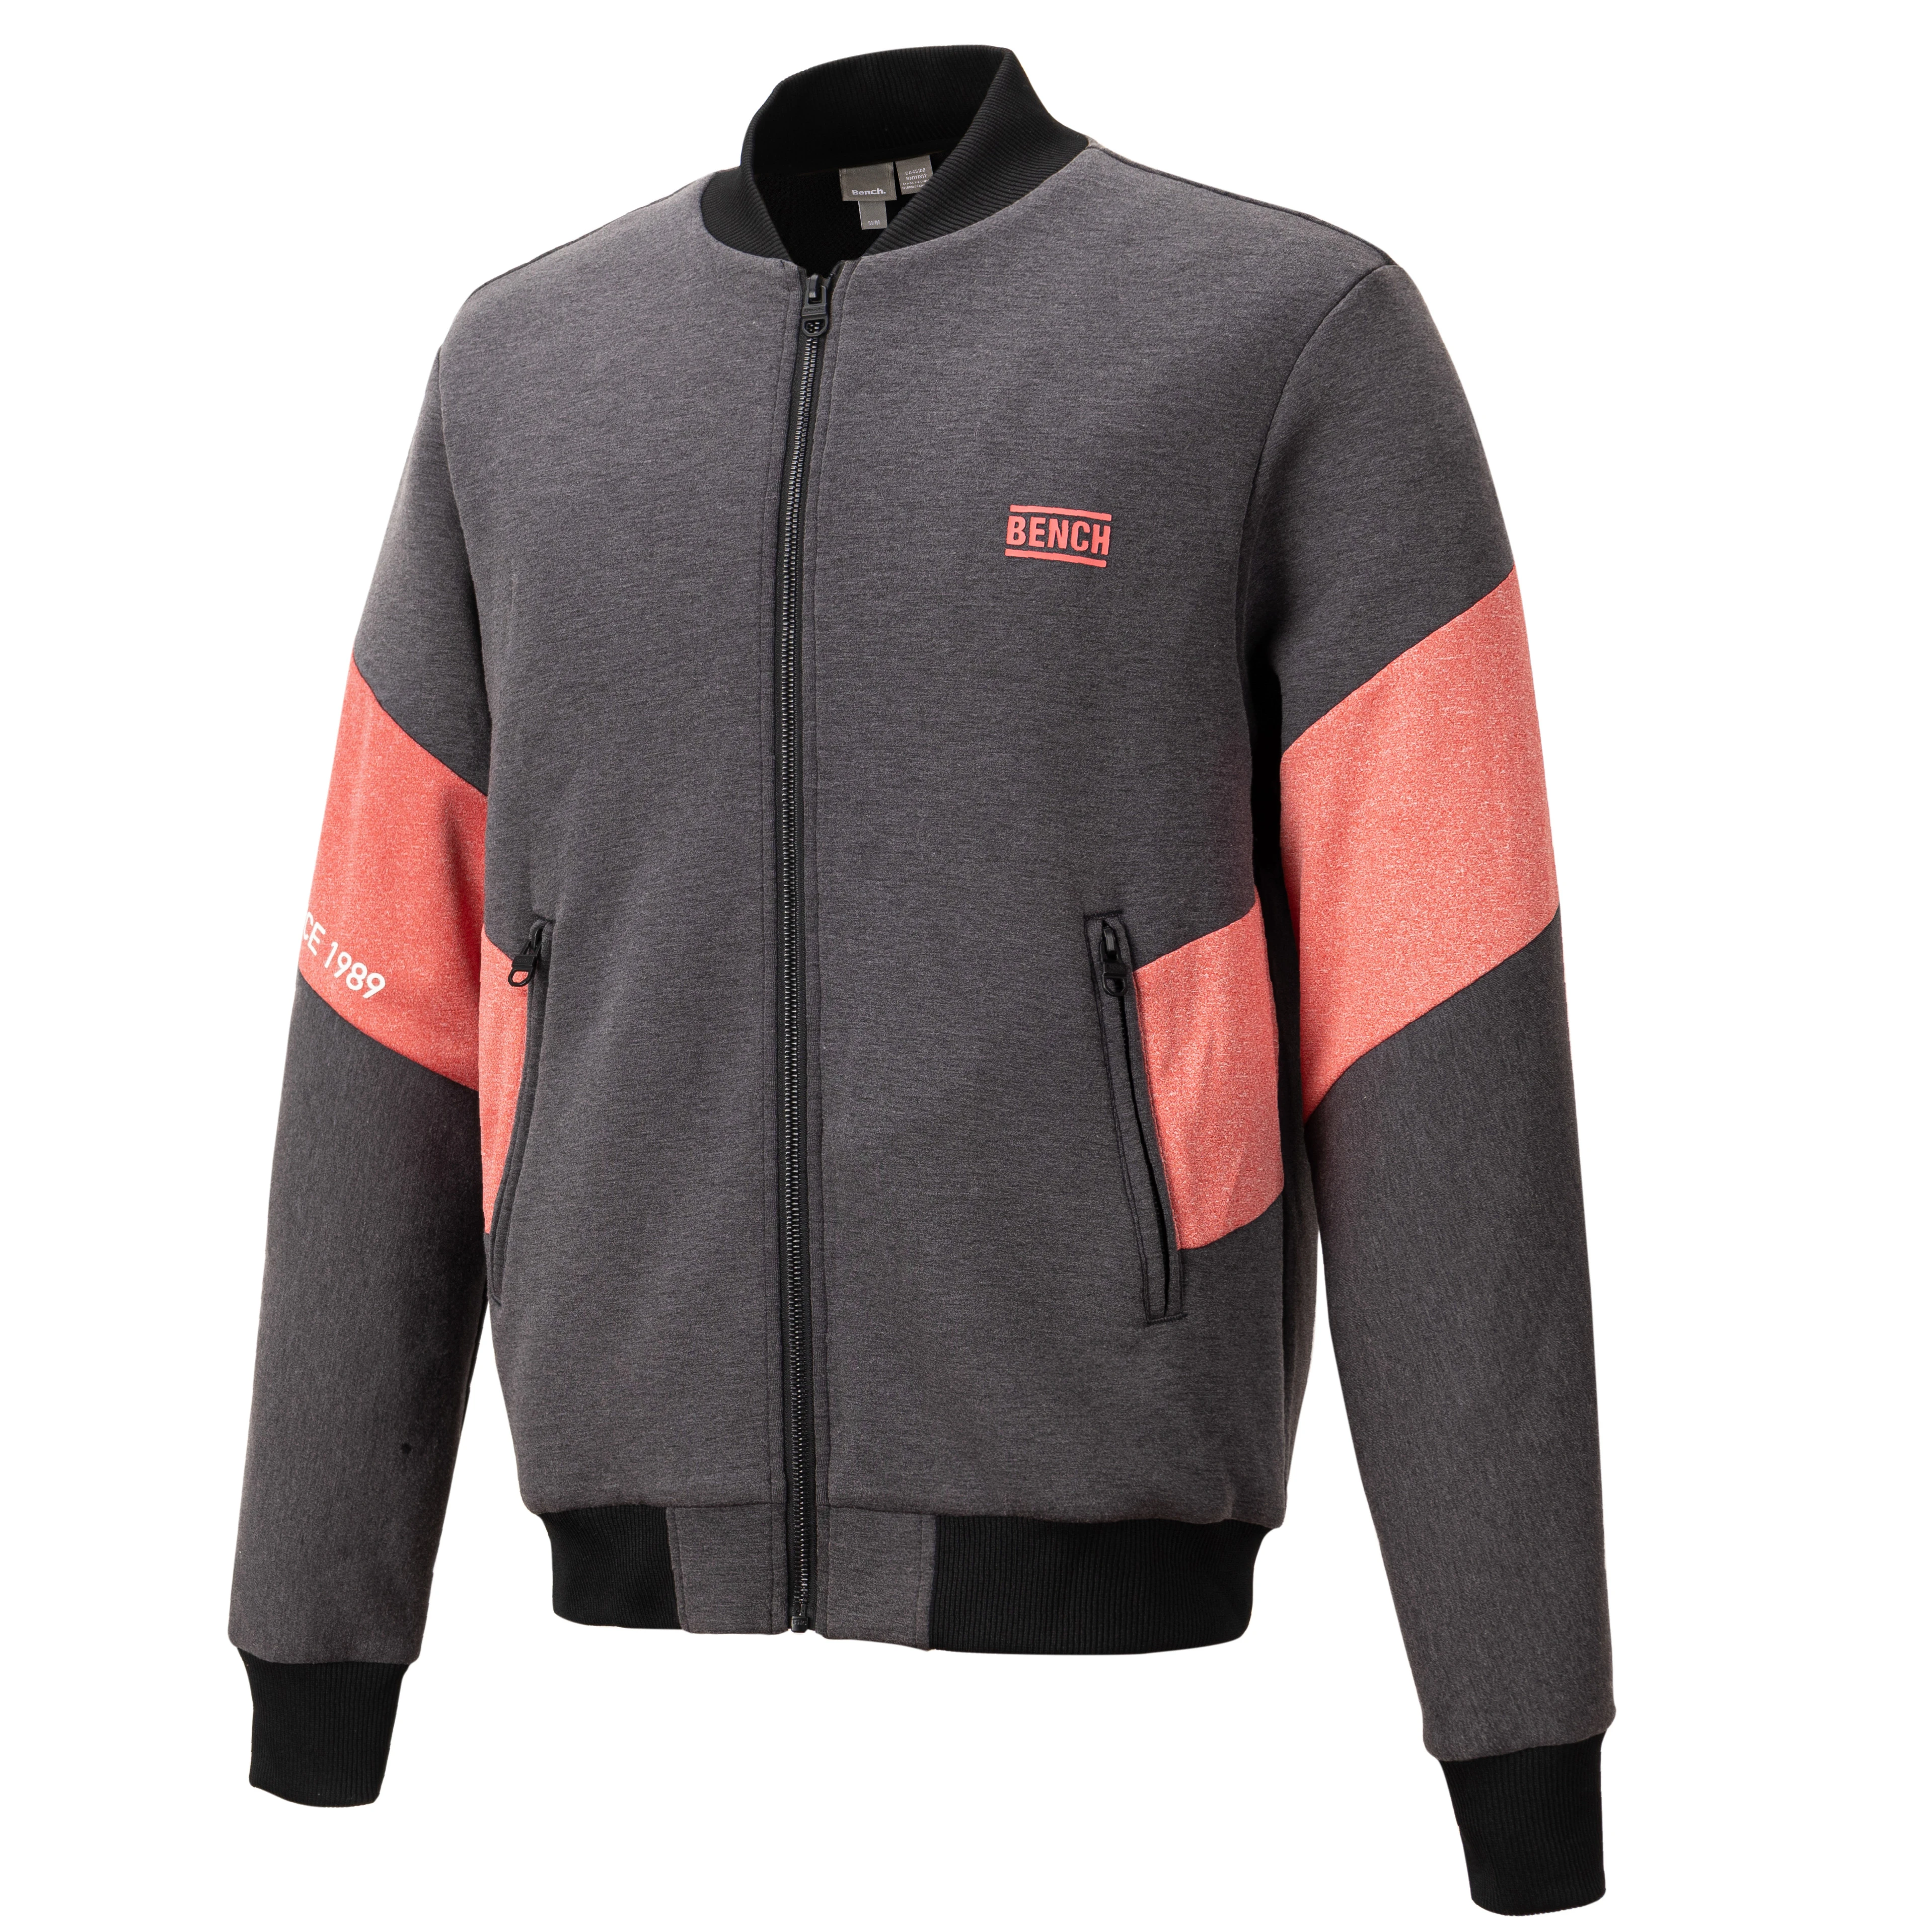 Outdoor sport jacket coat polyester spandex dark gray red color men soft shell bomber jacket custom